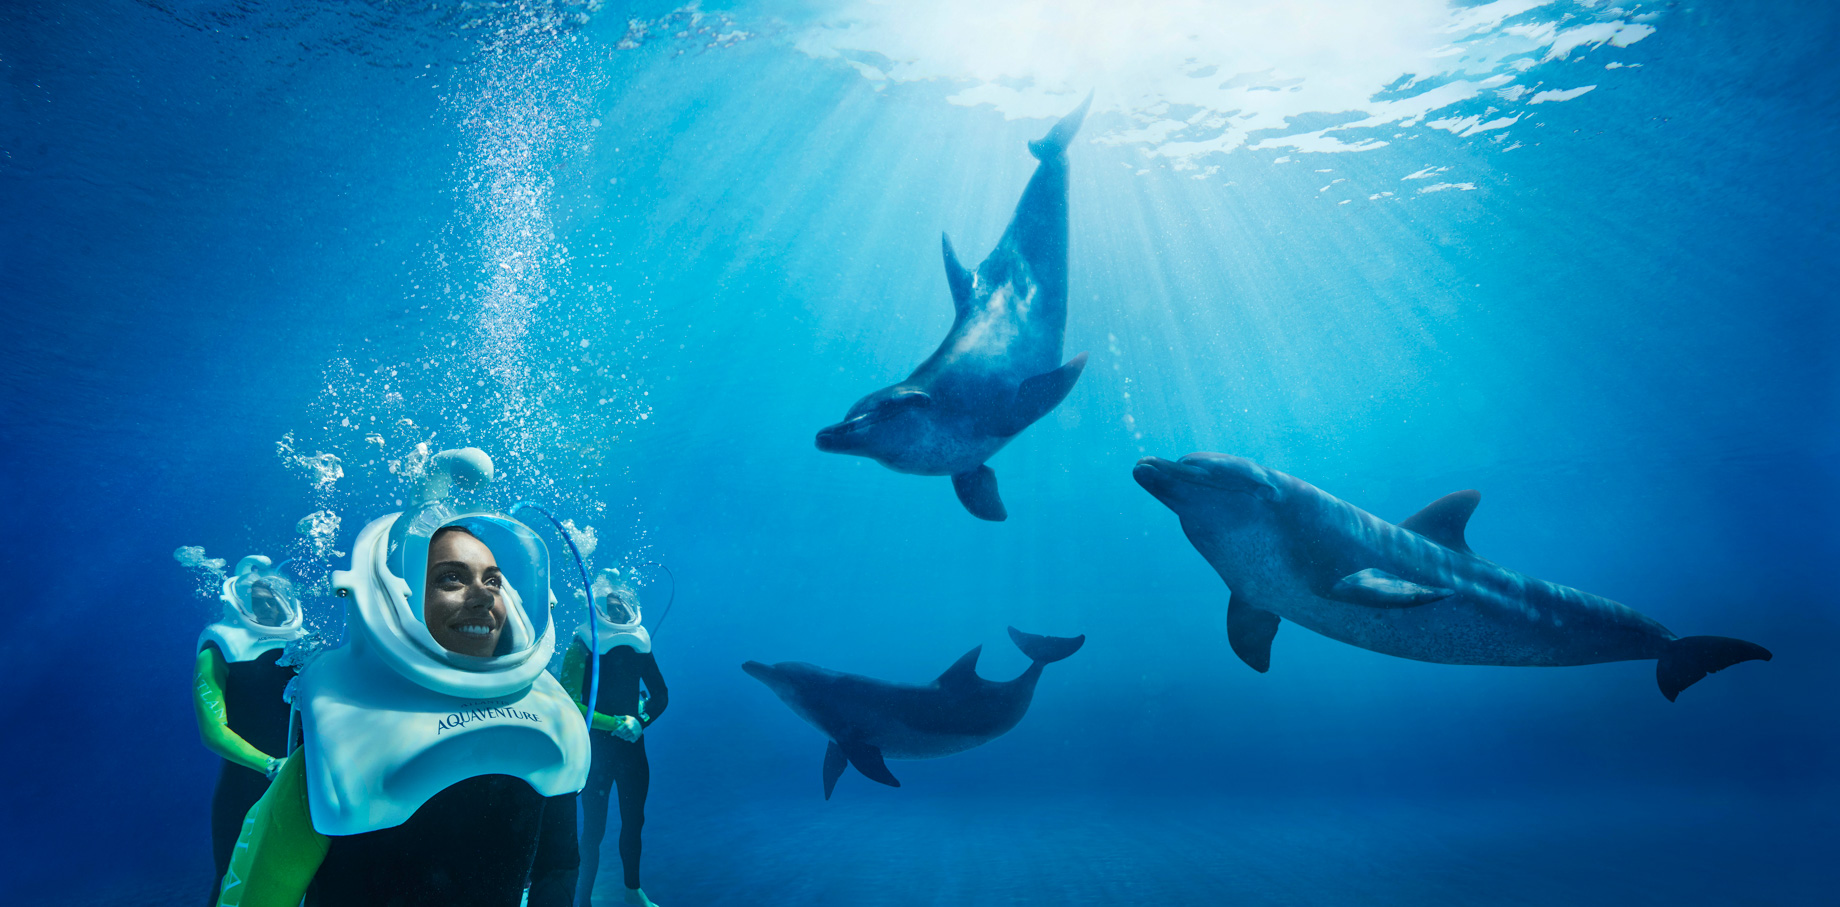 Atlantis The Palm Resort - Crescent Rd, Dubai, UAE - Underwater Dolphin Trek